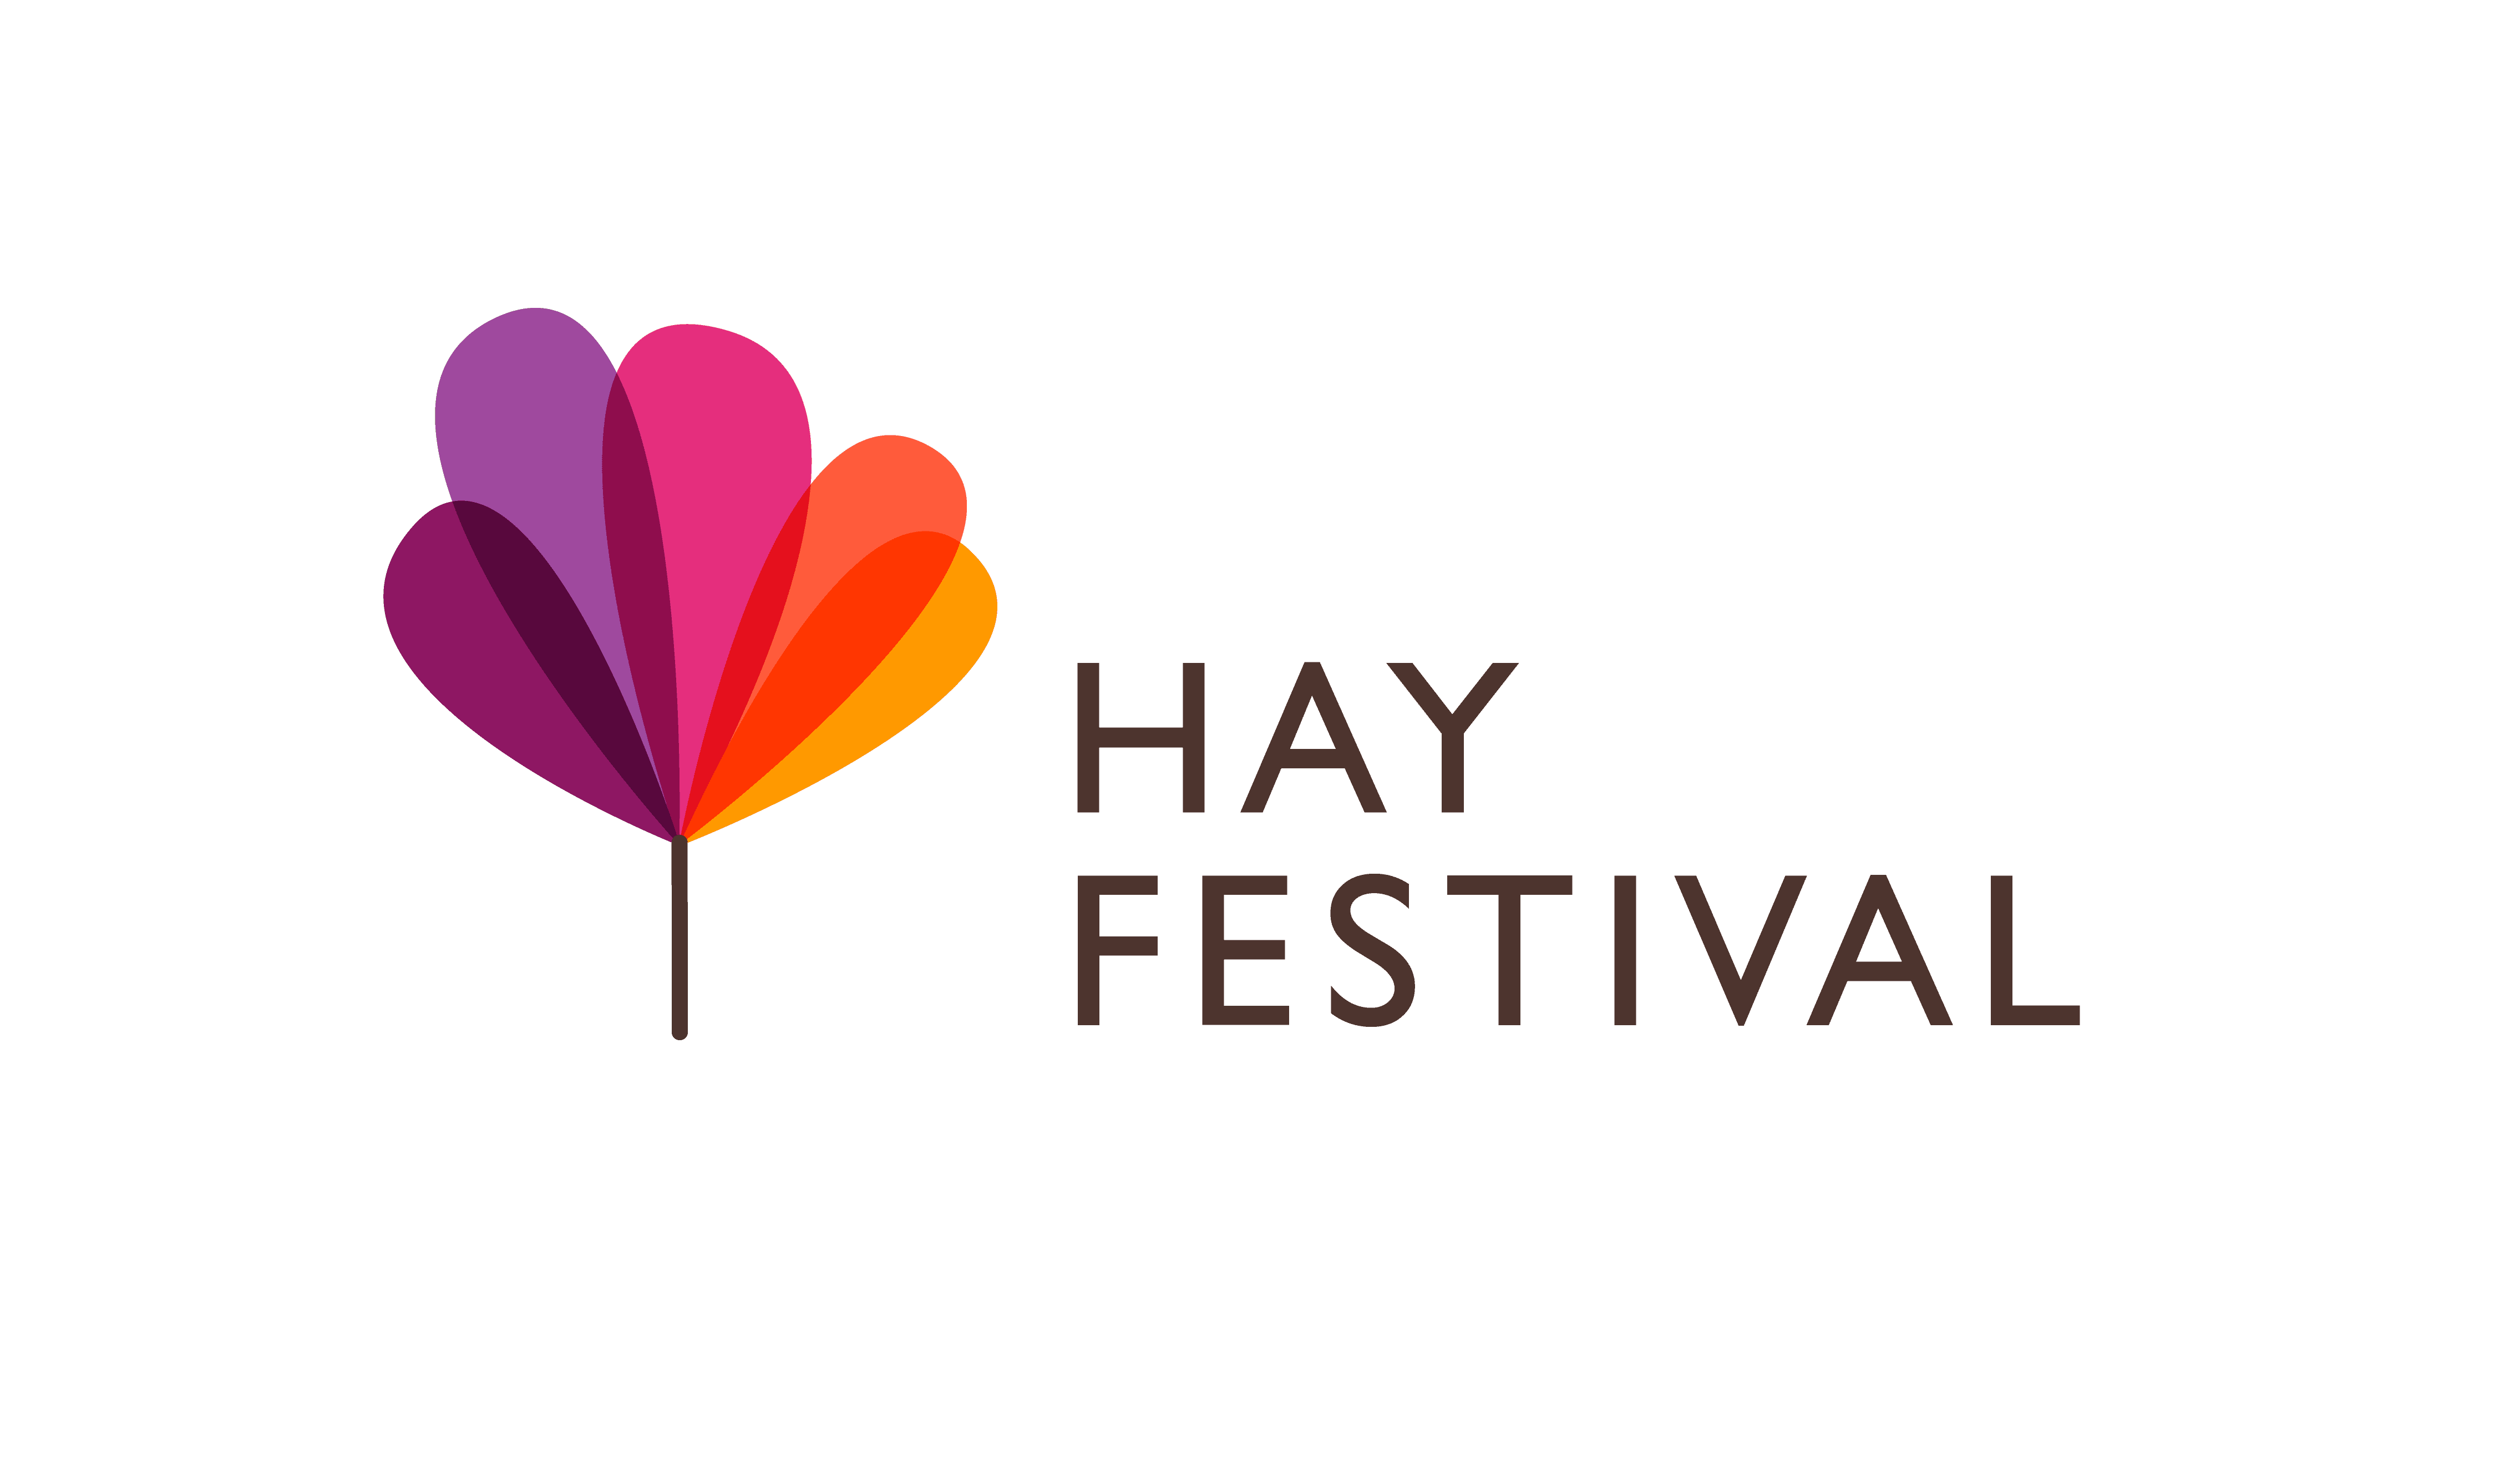 Hay festival